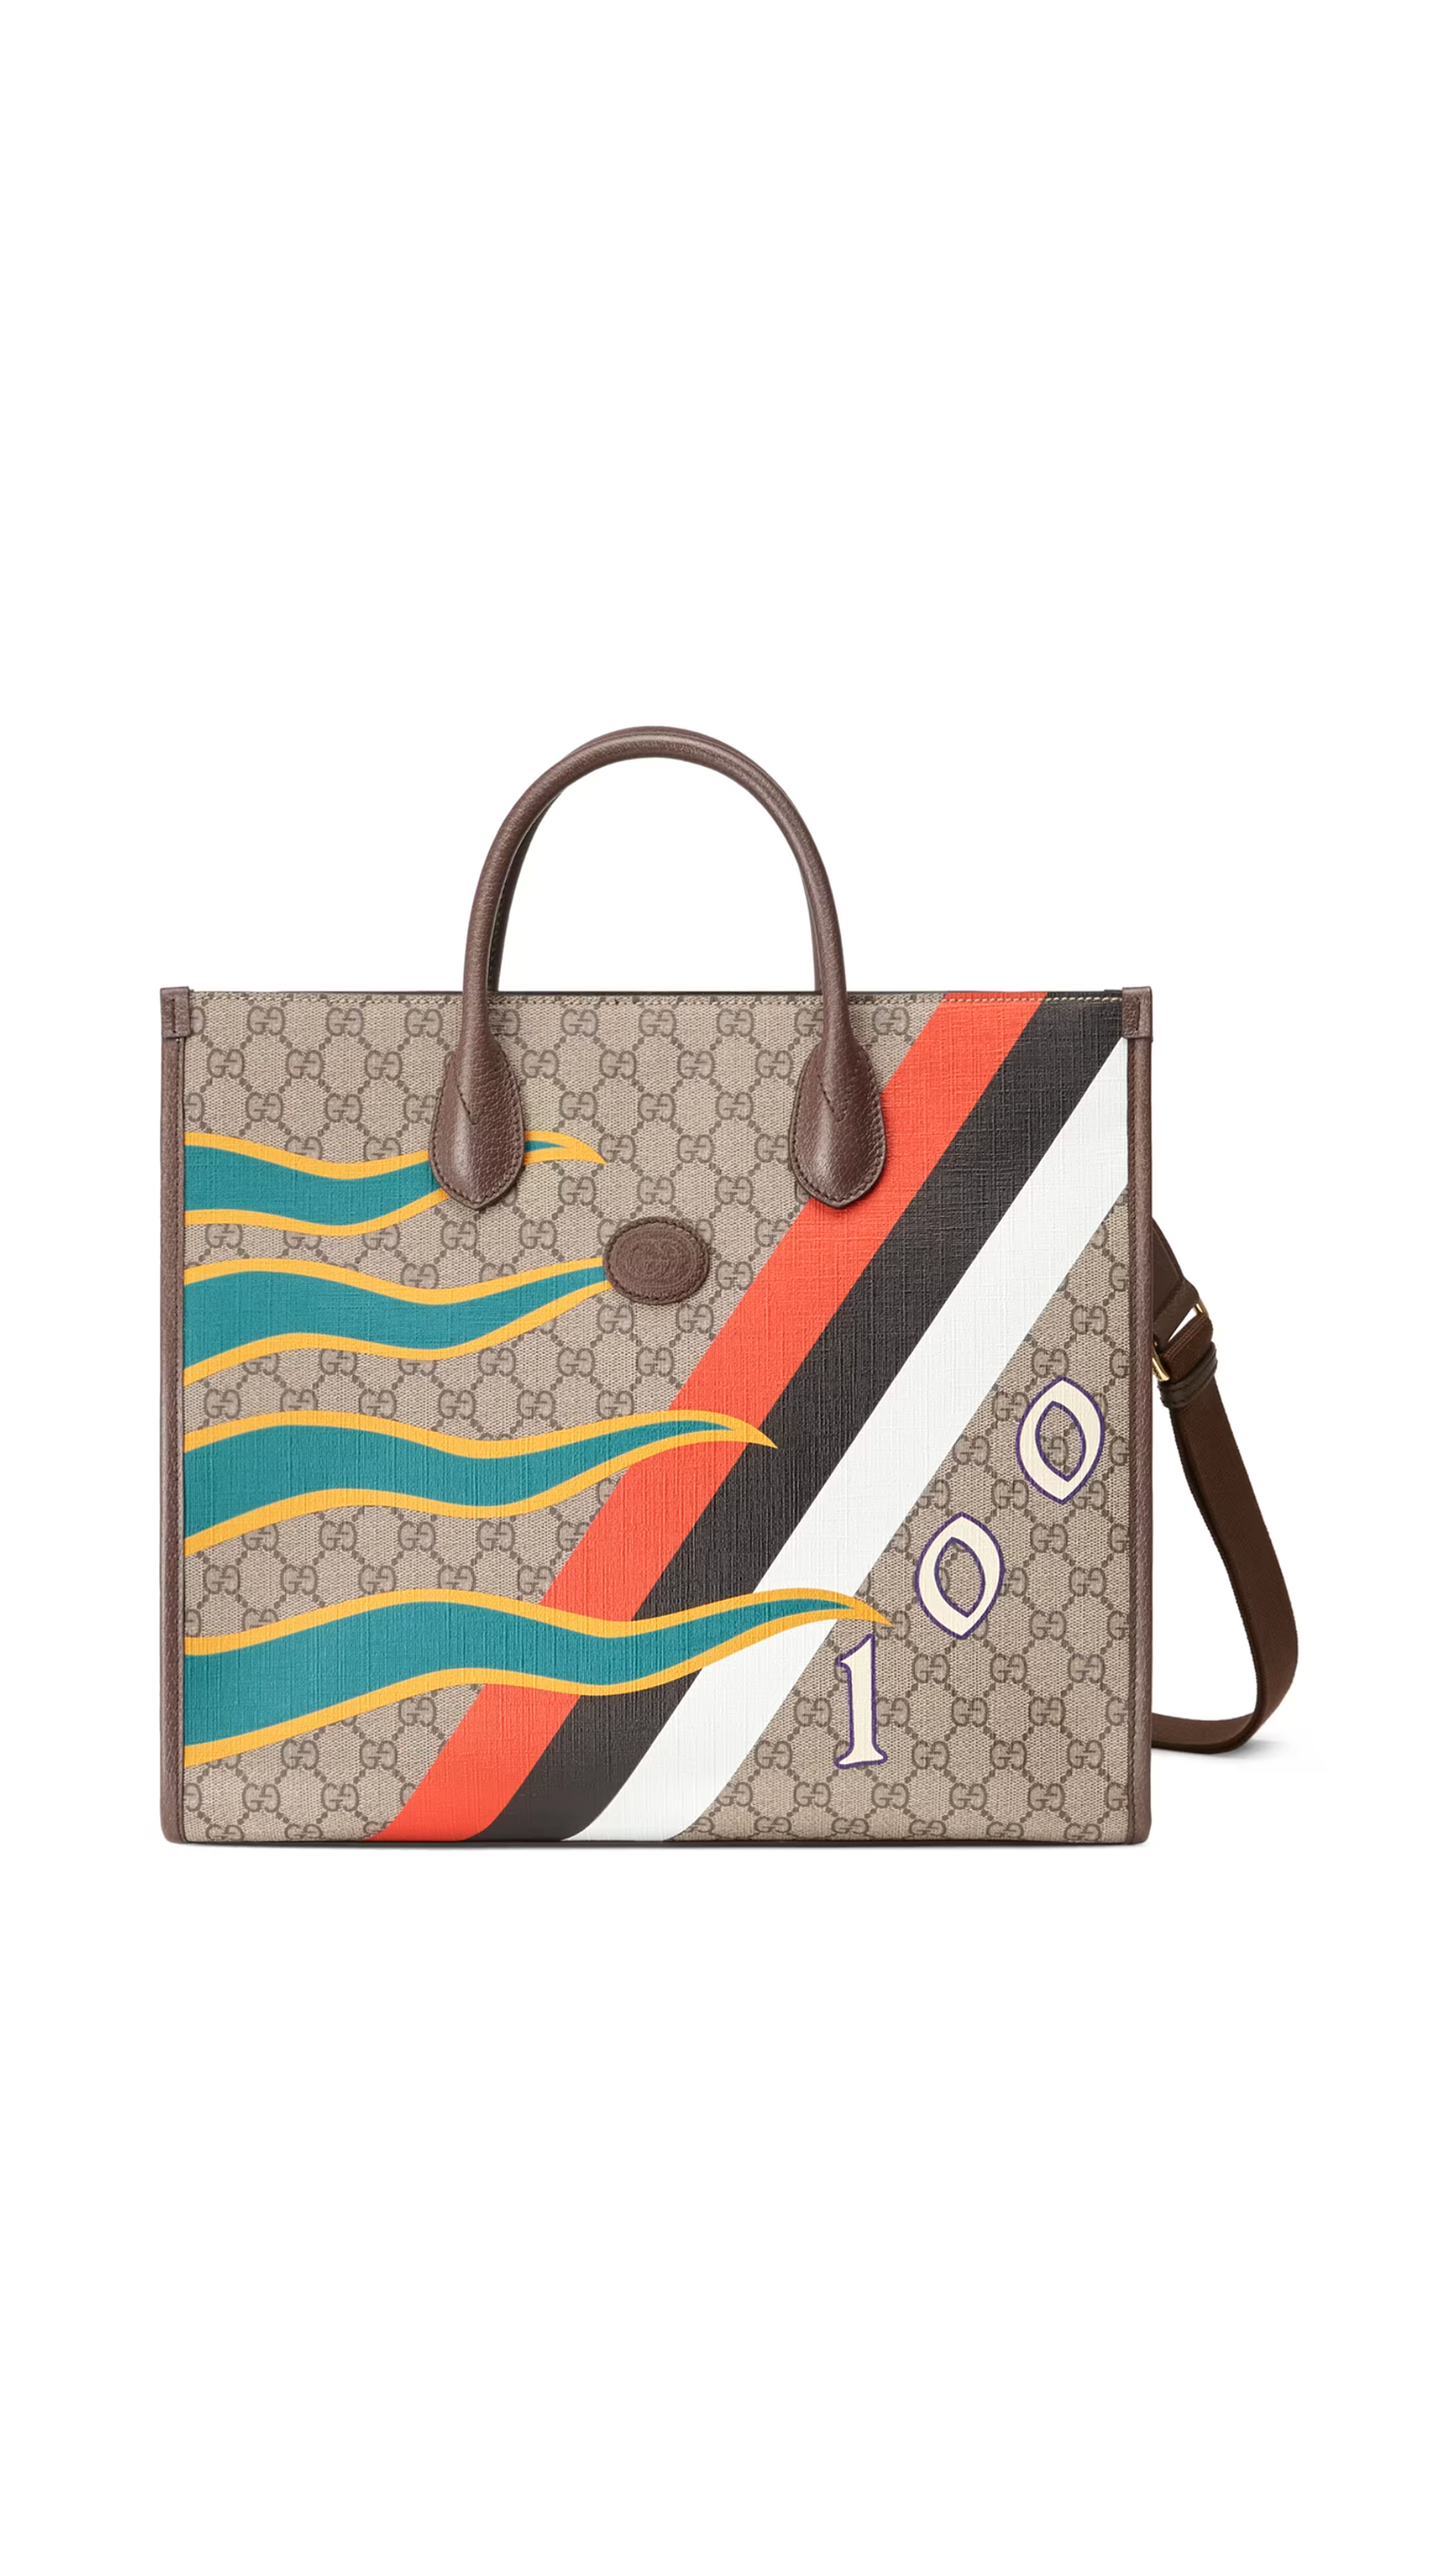 Medium Shopping Bag with Geometric Print - GG Supreme.